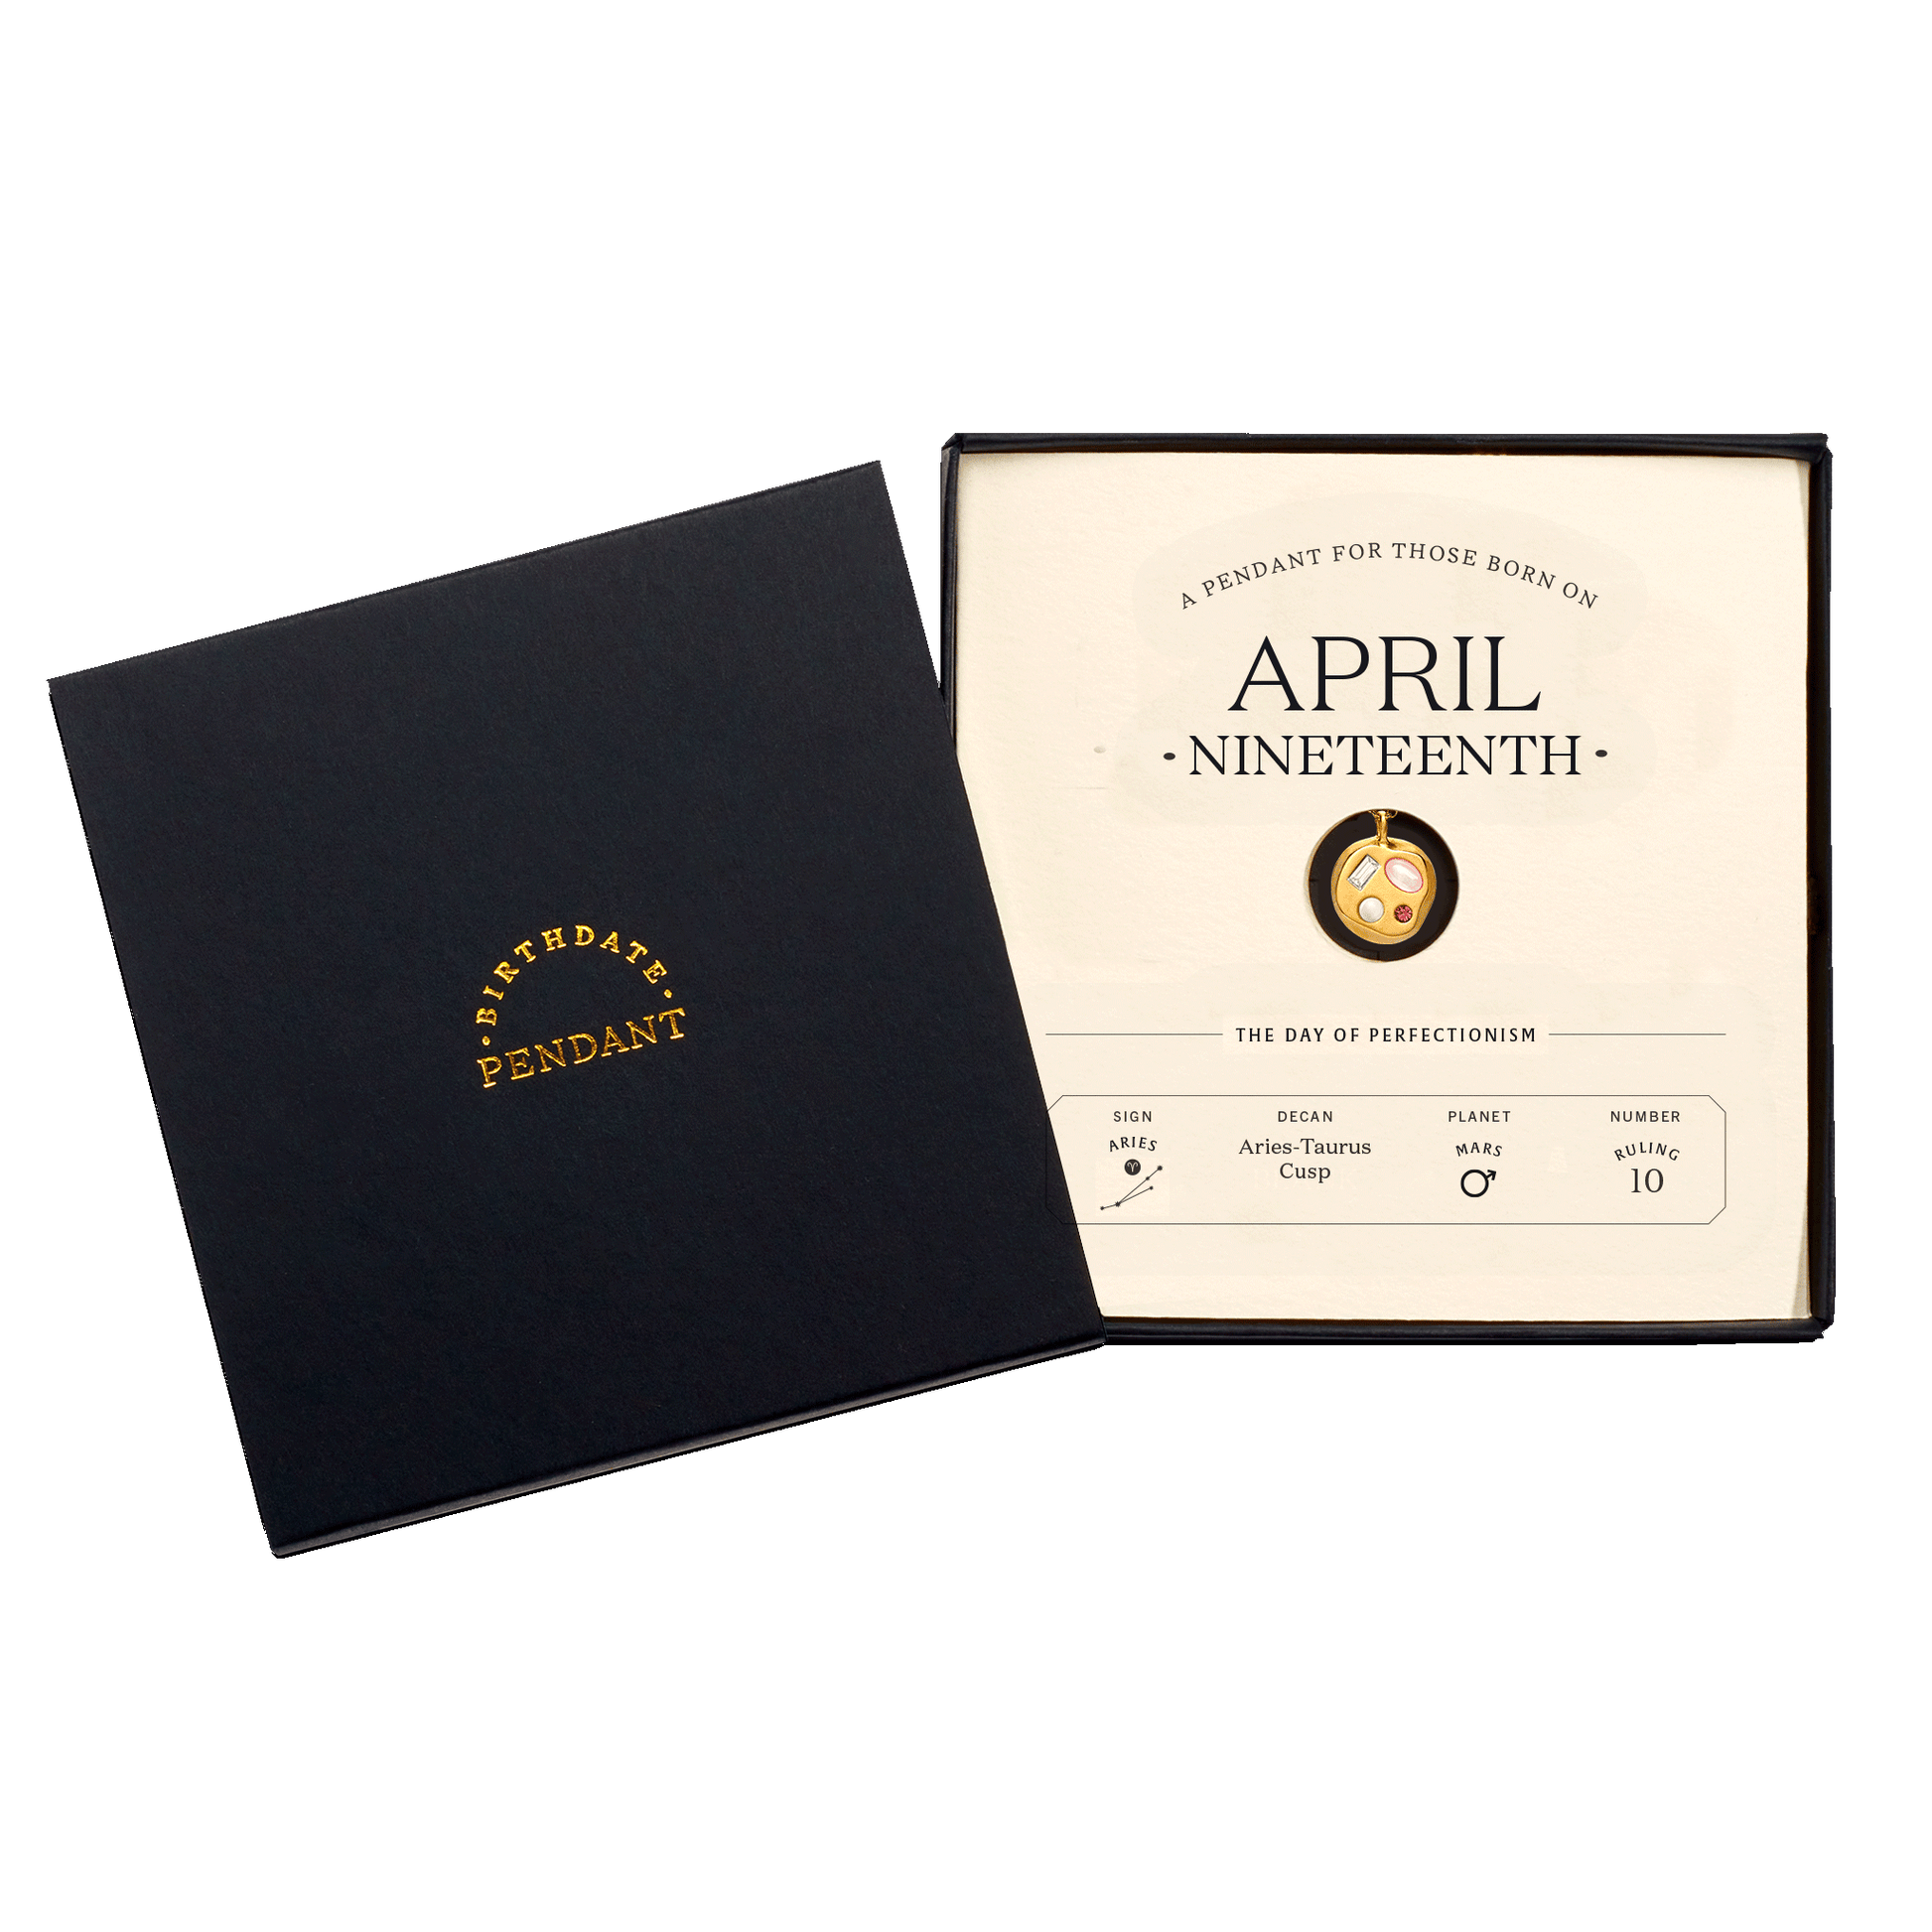 The April Nineteenth Pendant inside its box